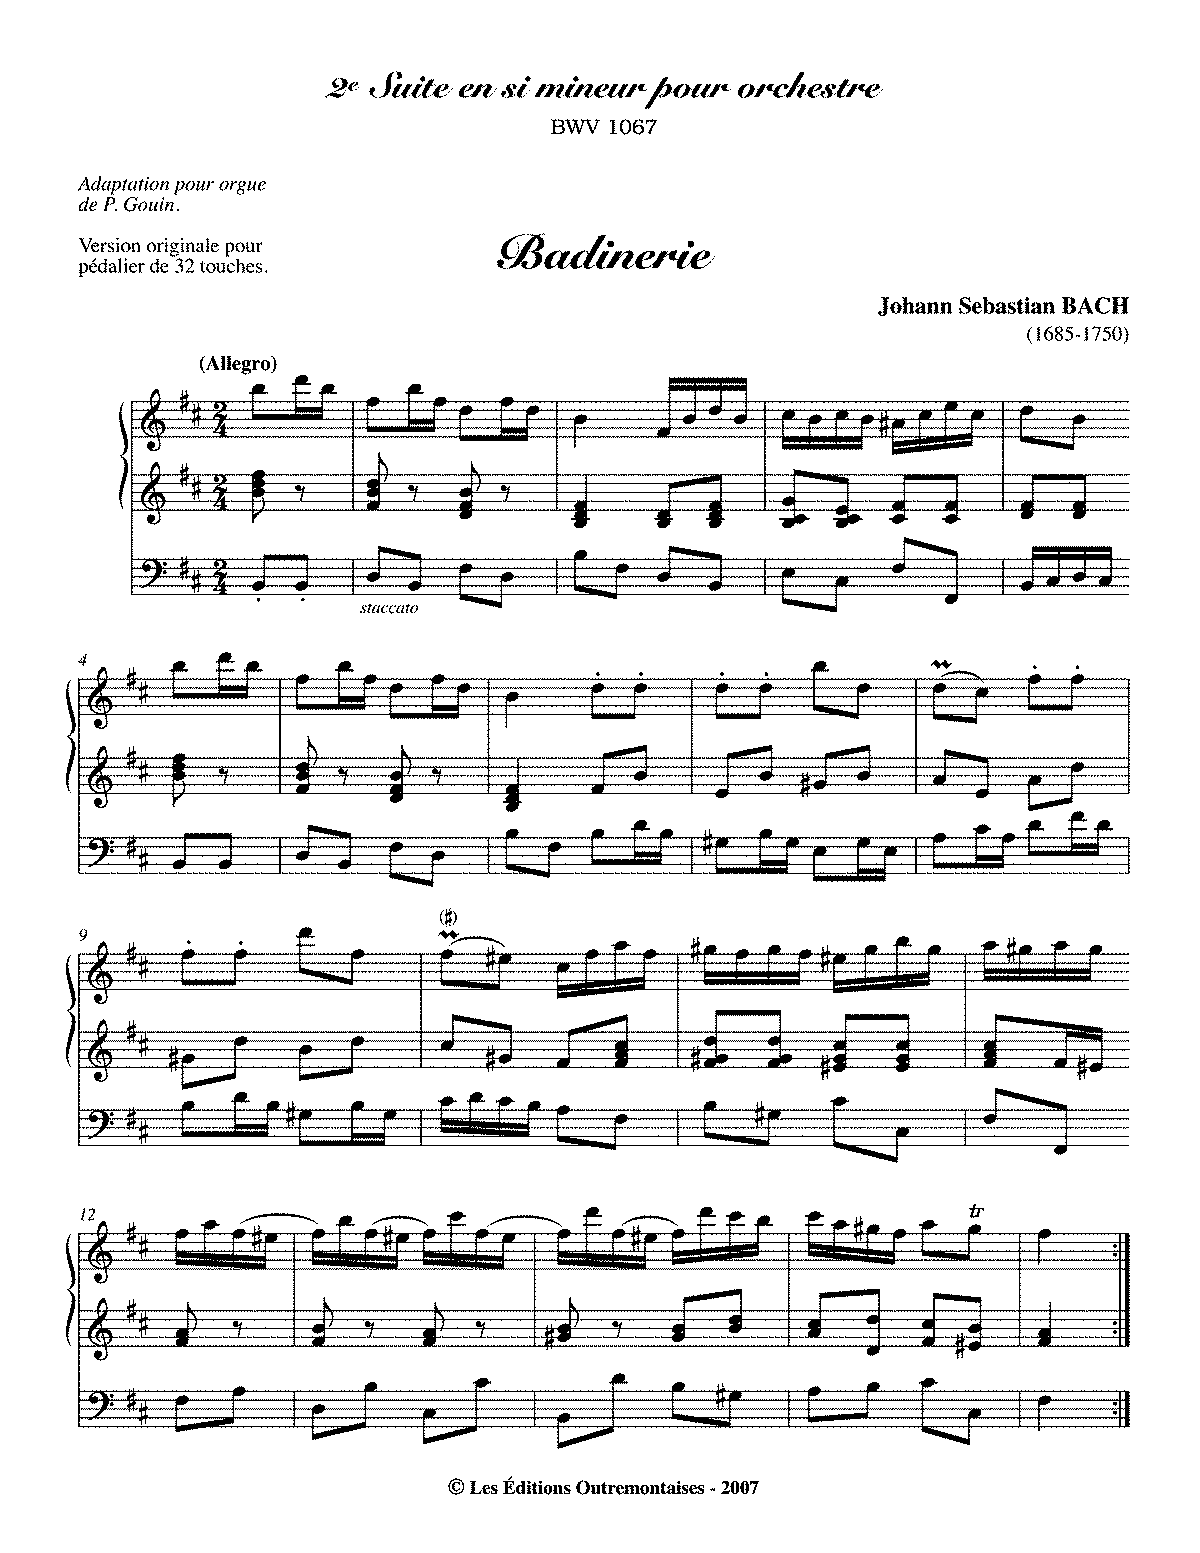 Orchestral Suite No.2 in B minor, BWV 1067 (Bach, Johann Sebastian